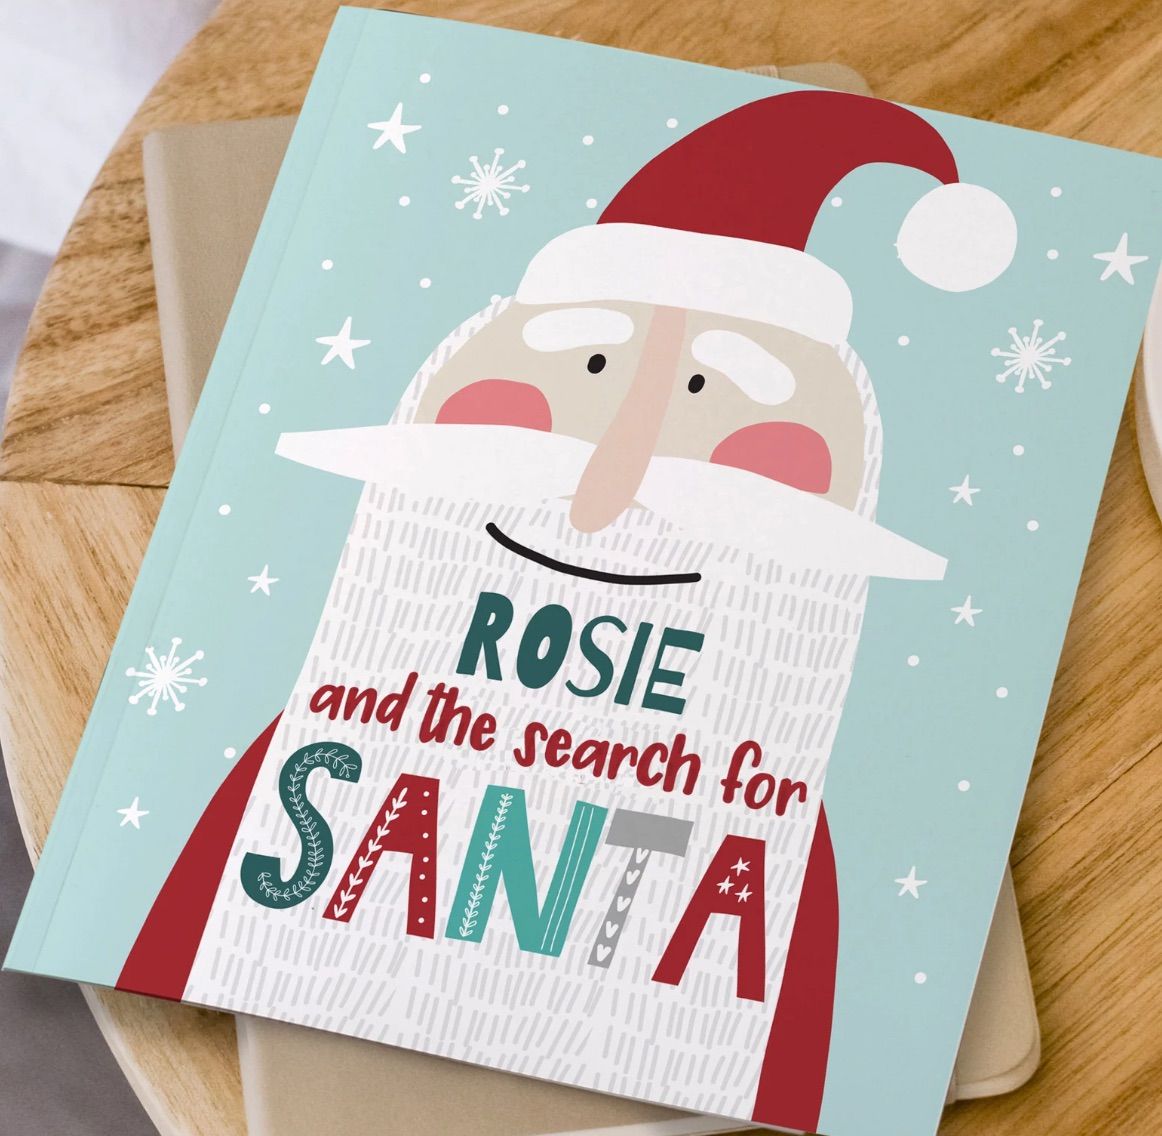 Search for Santa Personalized Book cover